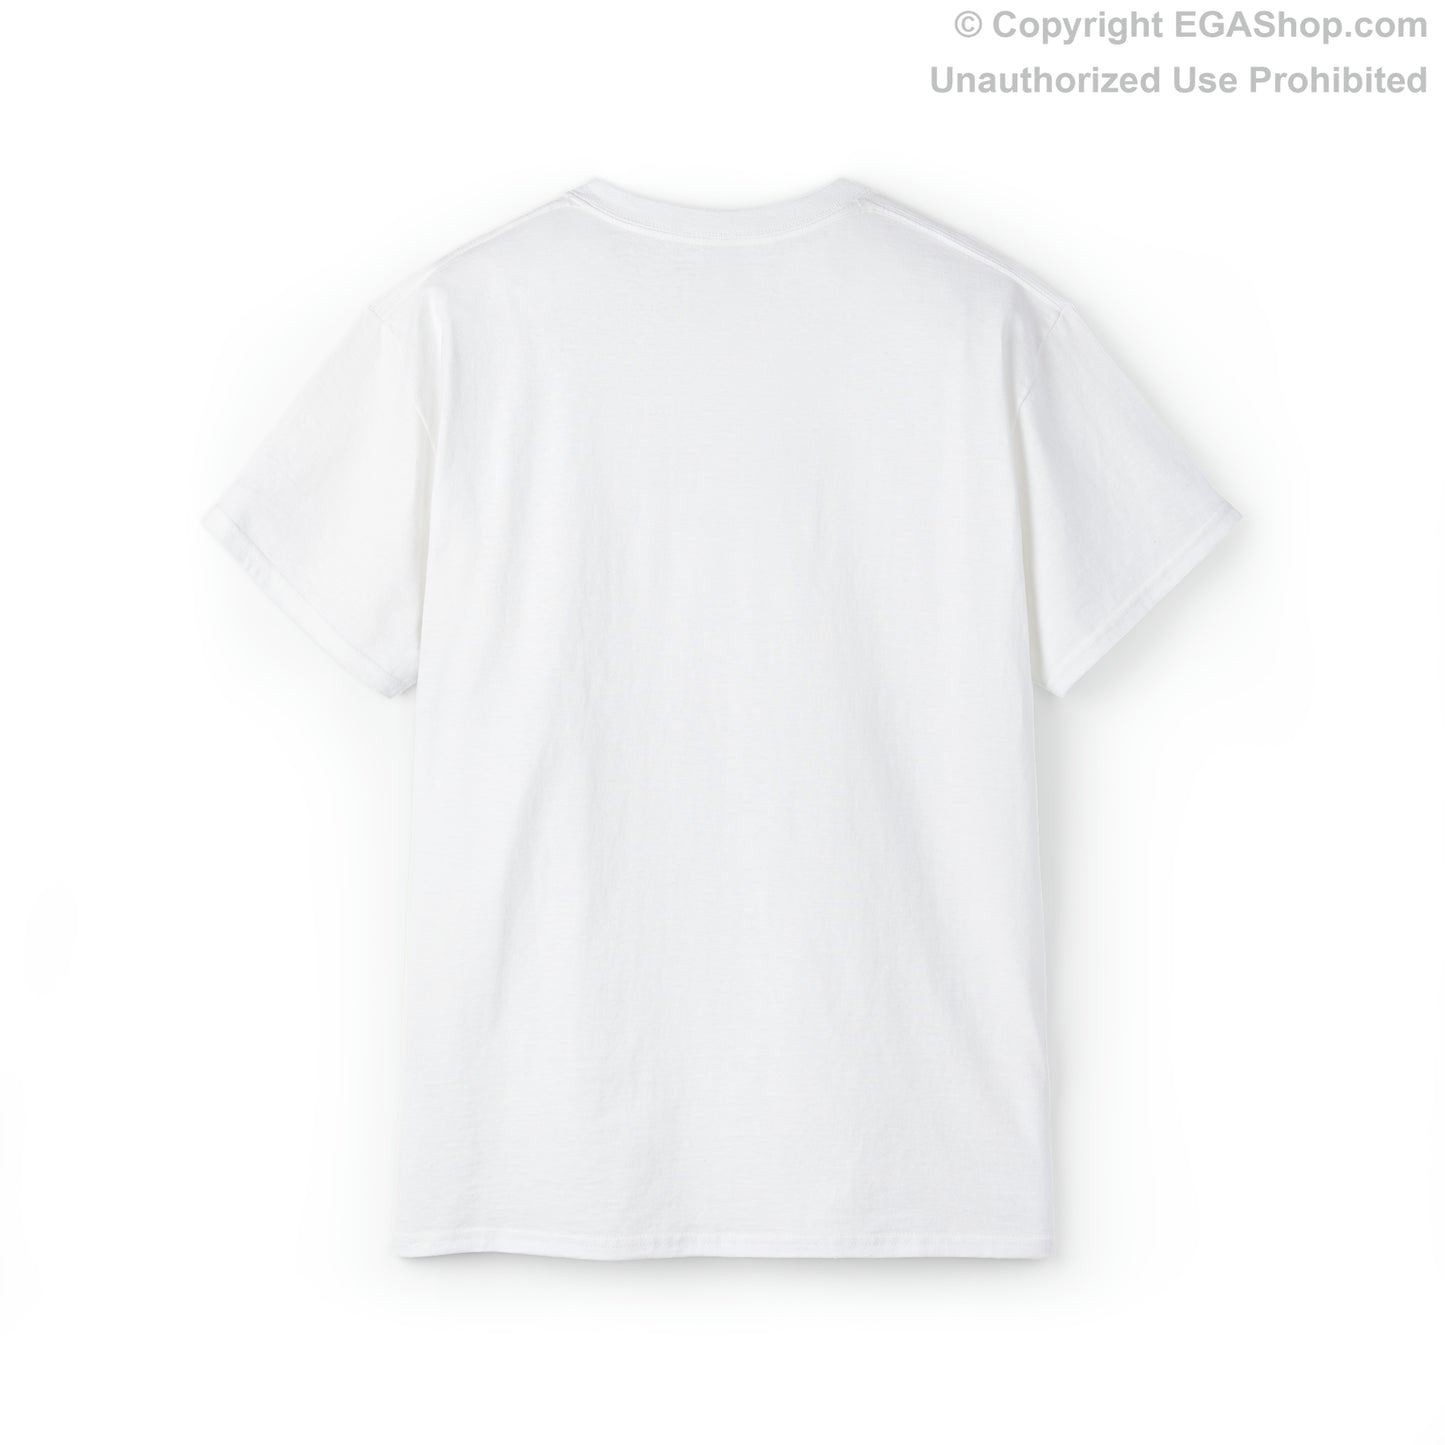 T-Shirt: India Co. MCRD Parris Island (EGA, Blank Back)